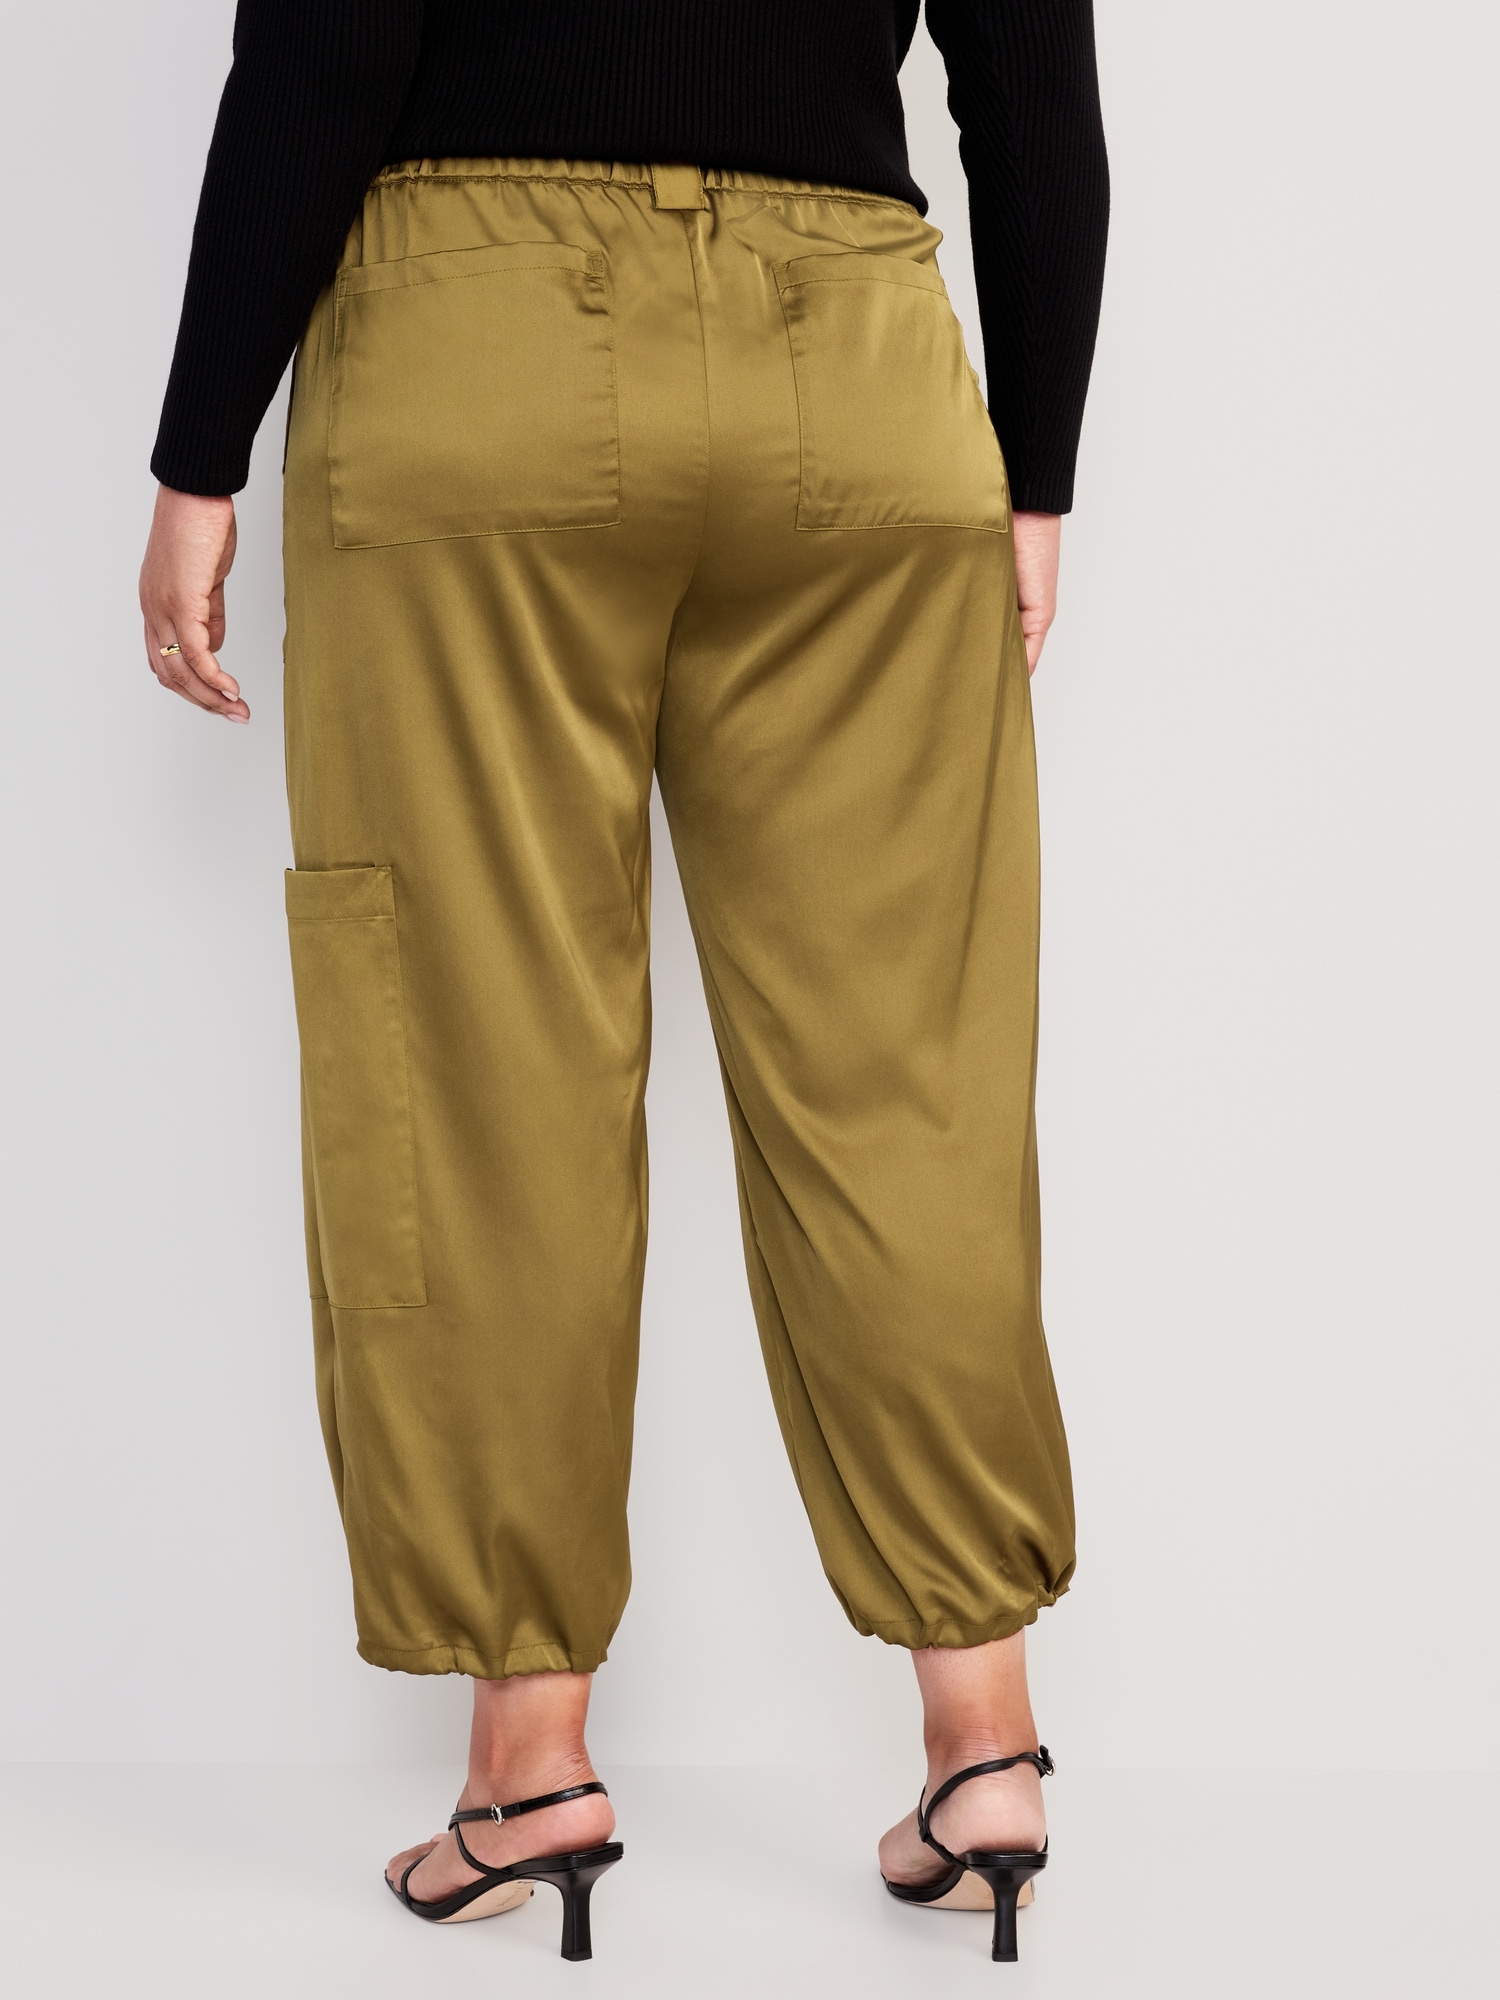 ALWAYS Women's Super Soft Casual Cargo Jogger Pants Navy XL